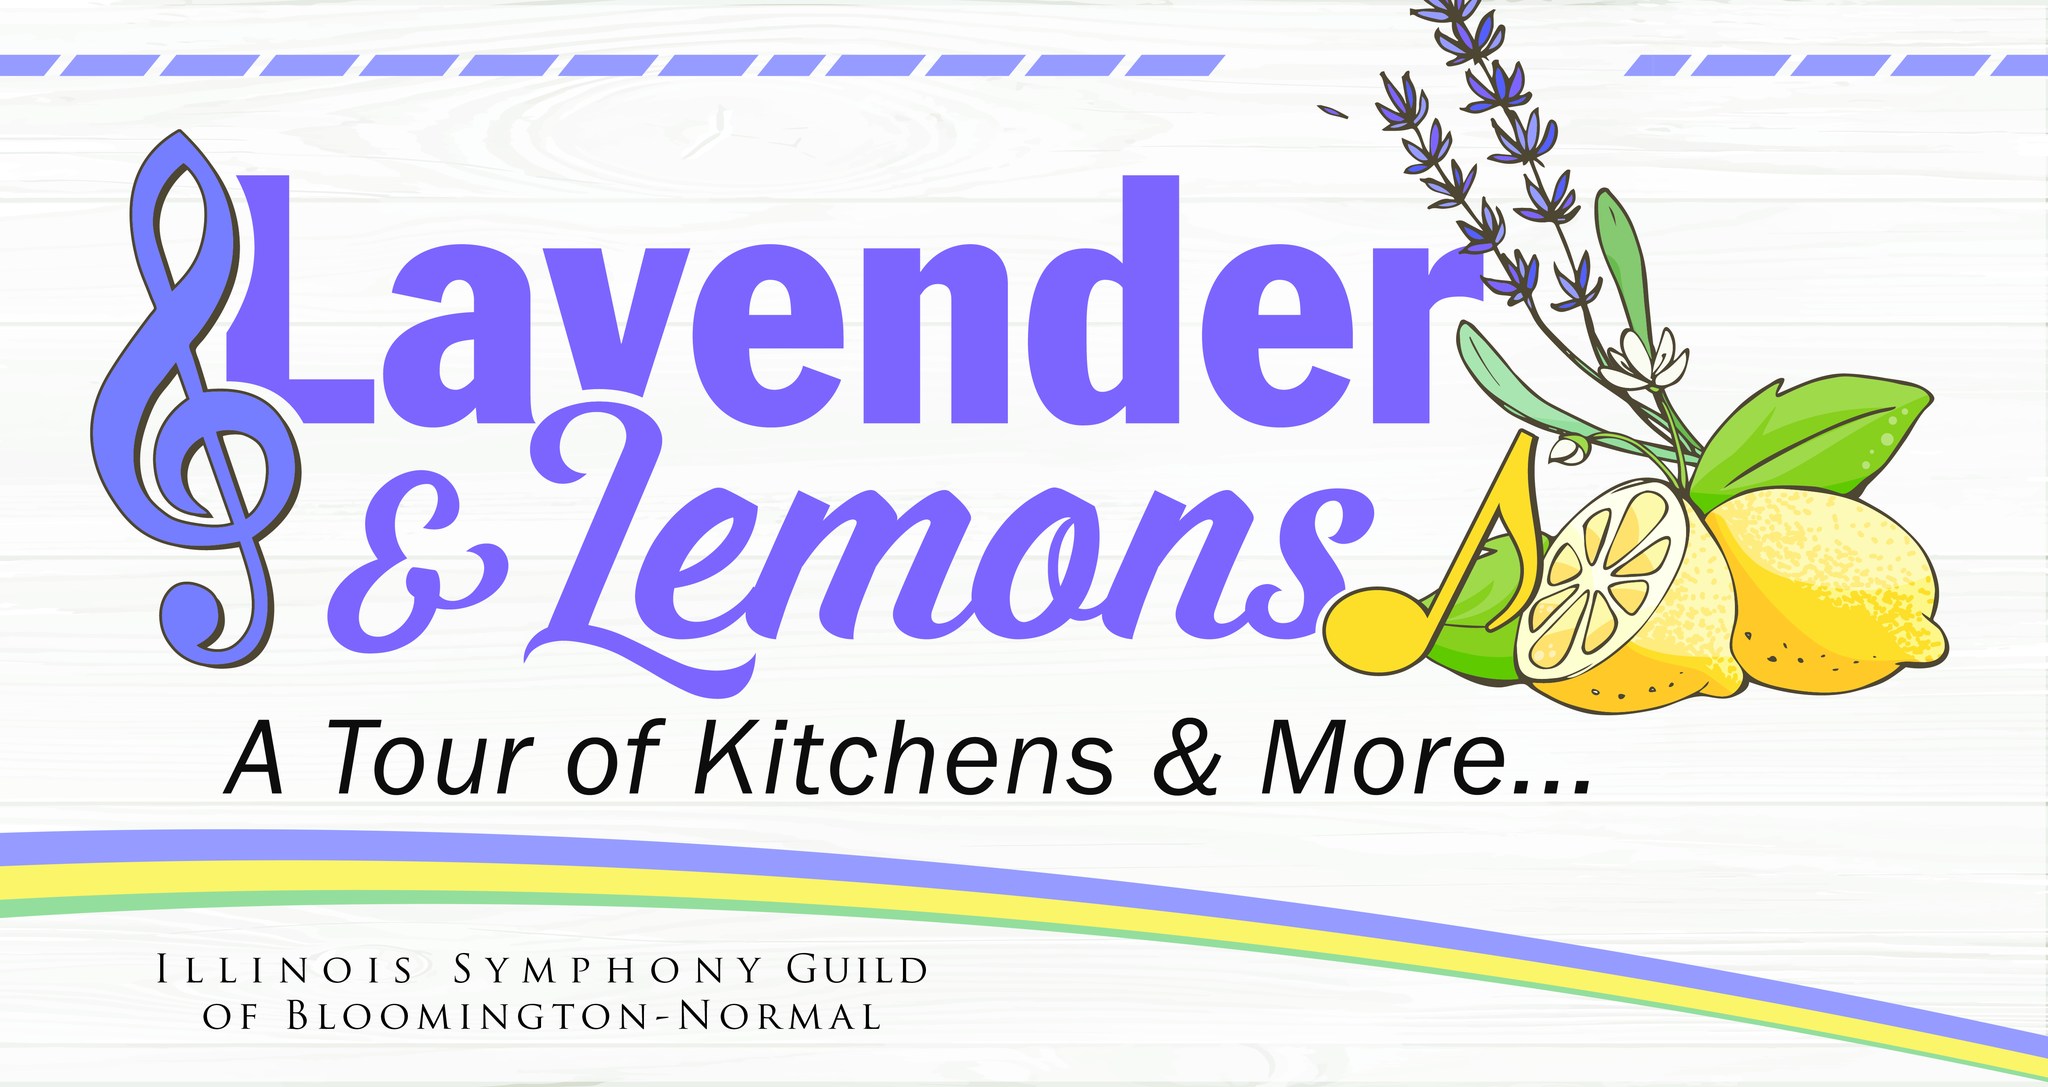 Lavender & Lemons, A Tour of Kitchens & More...